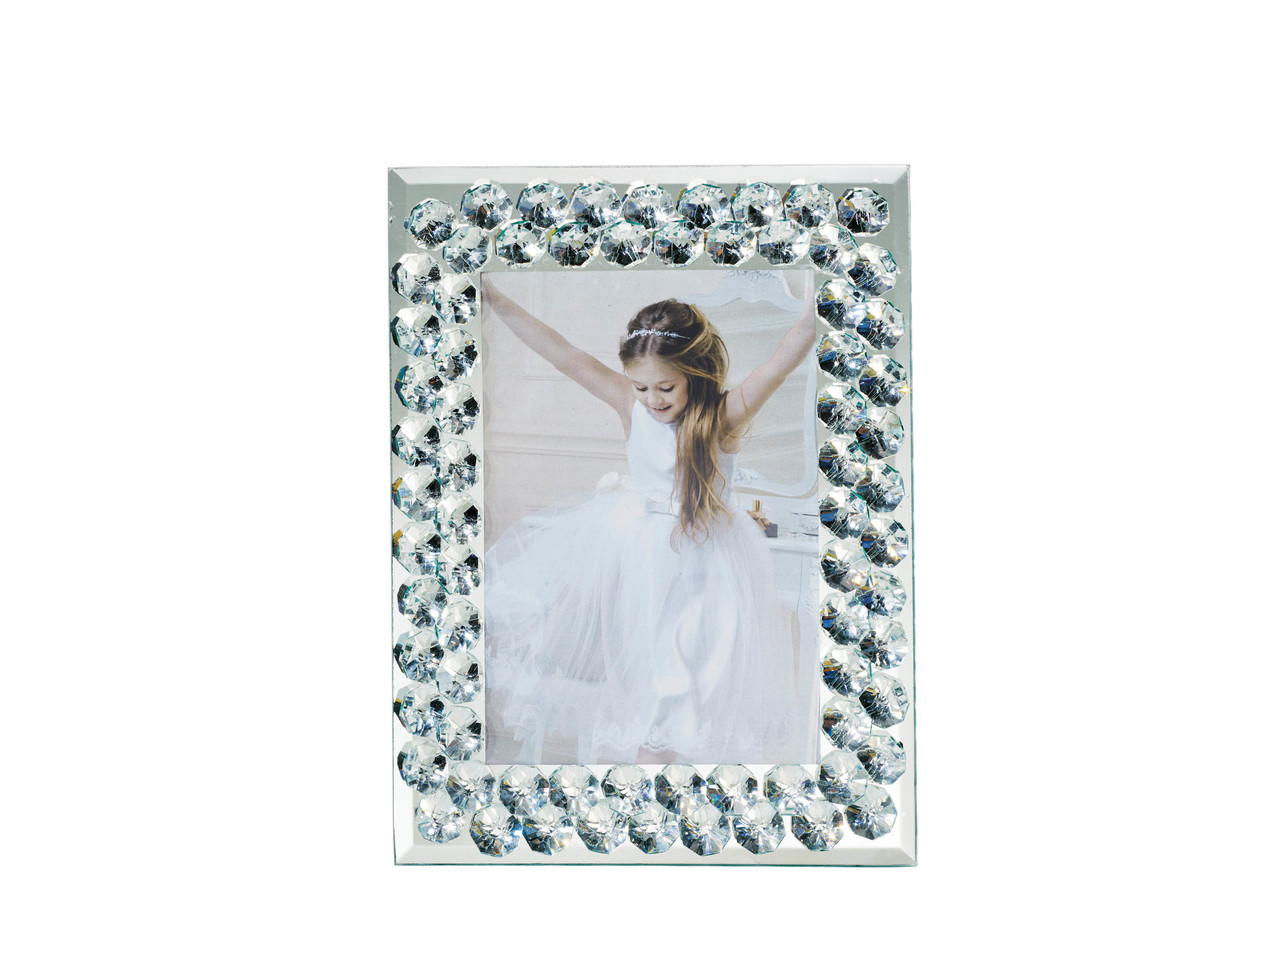 MELINERA Decorative Picture Frames